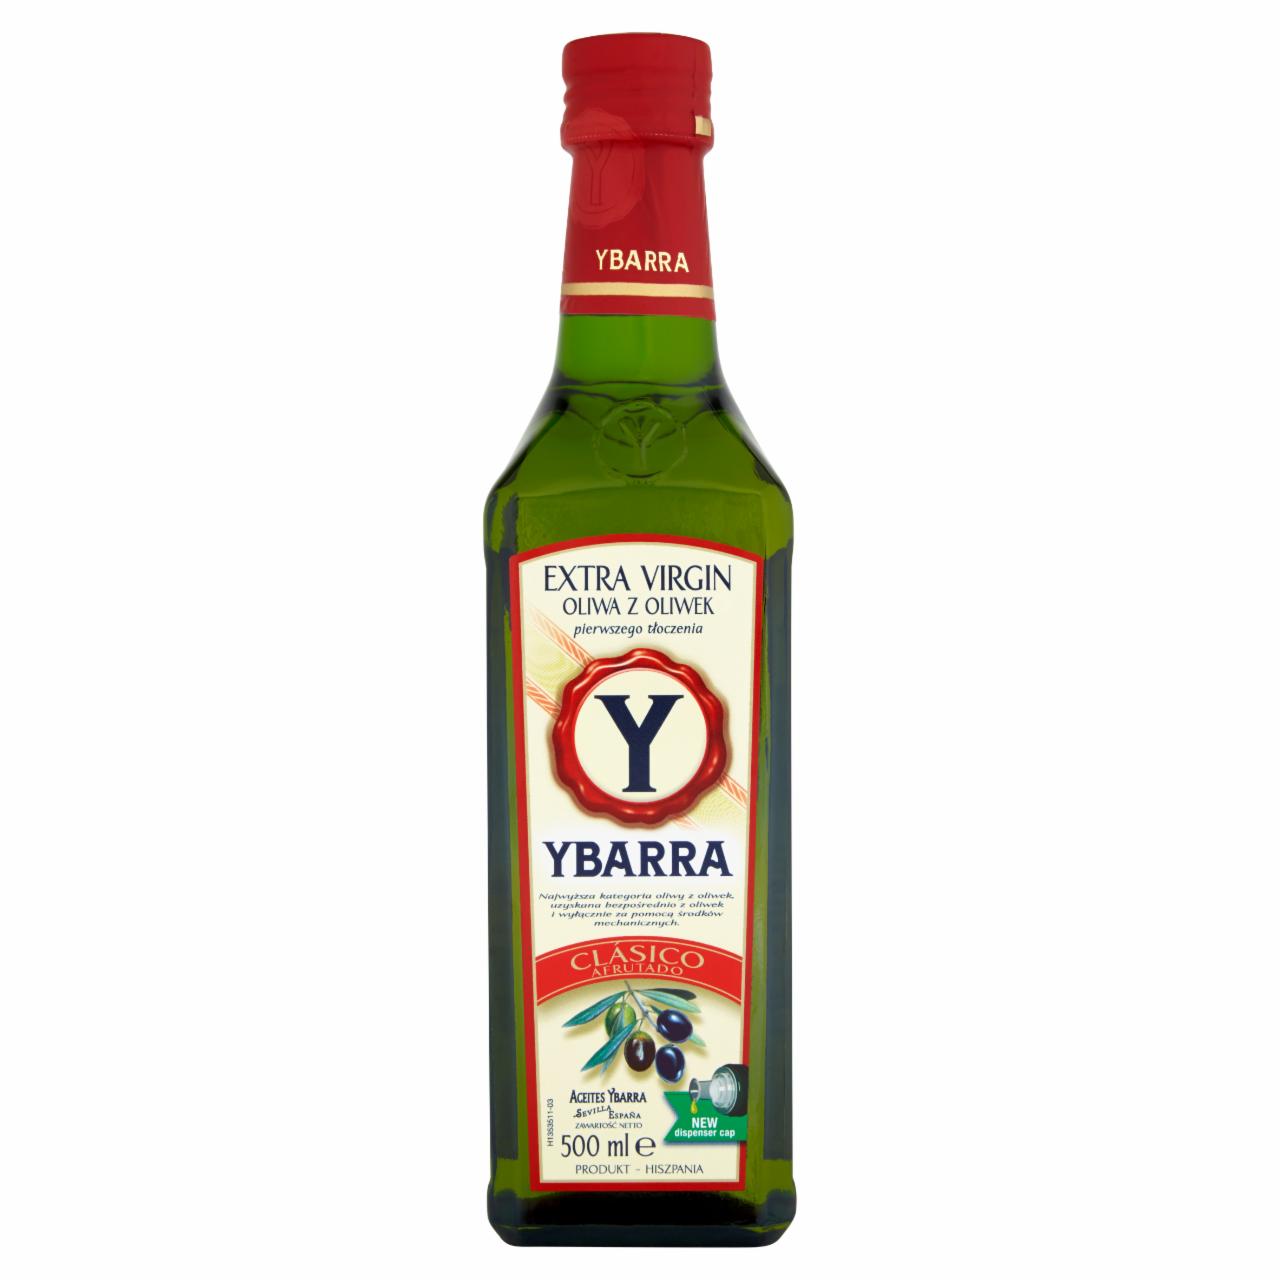 Photo - Ybarra Clasico Extra Virgin Olive Oil 500 ml